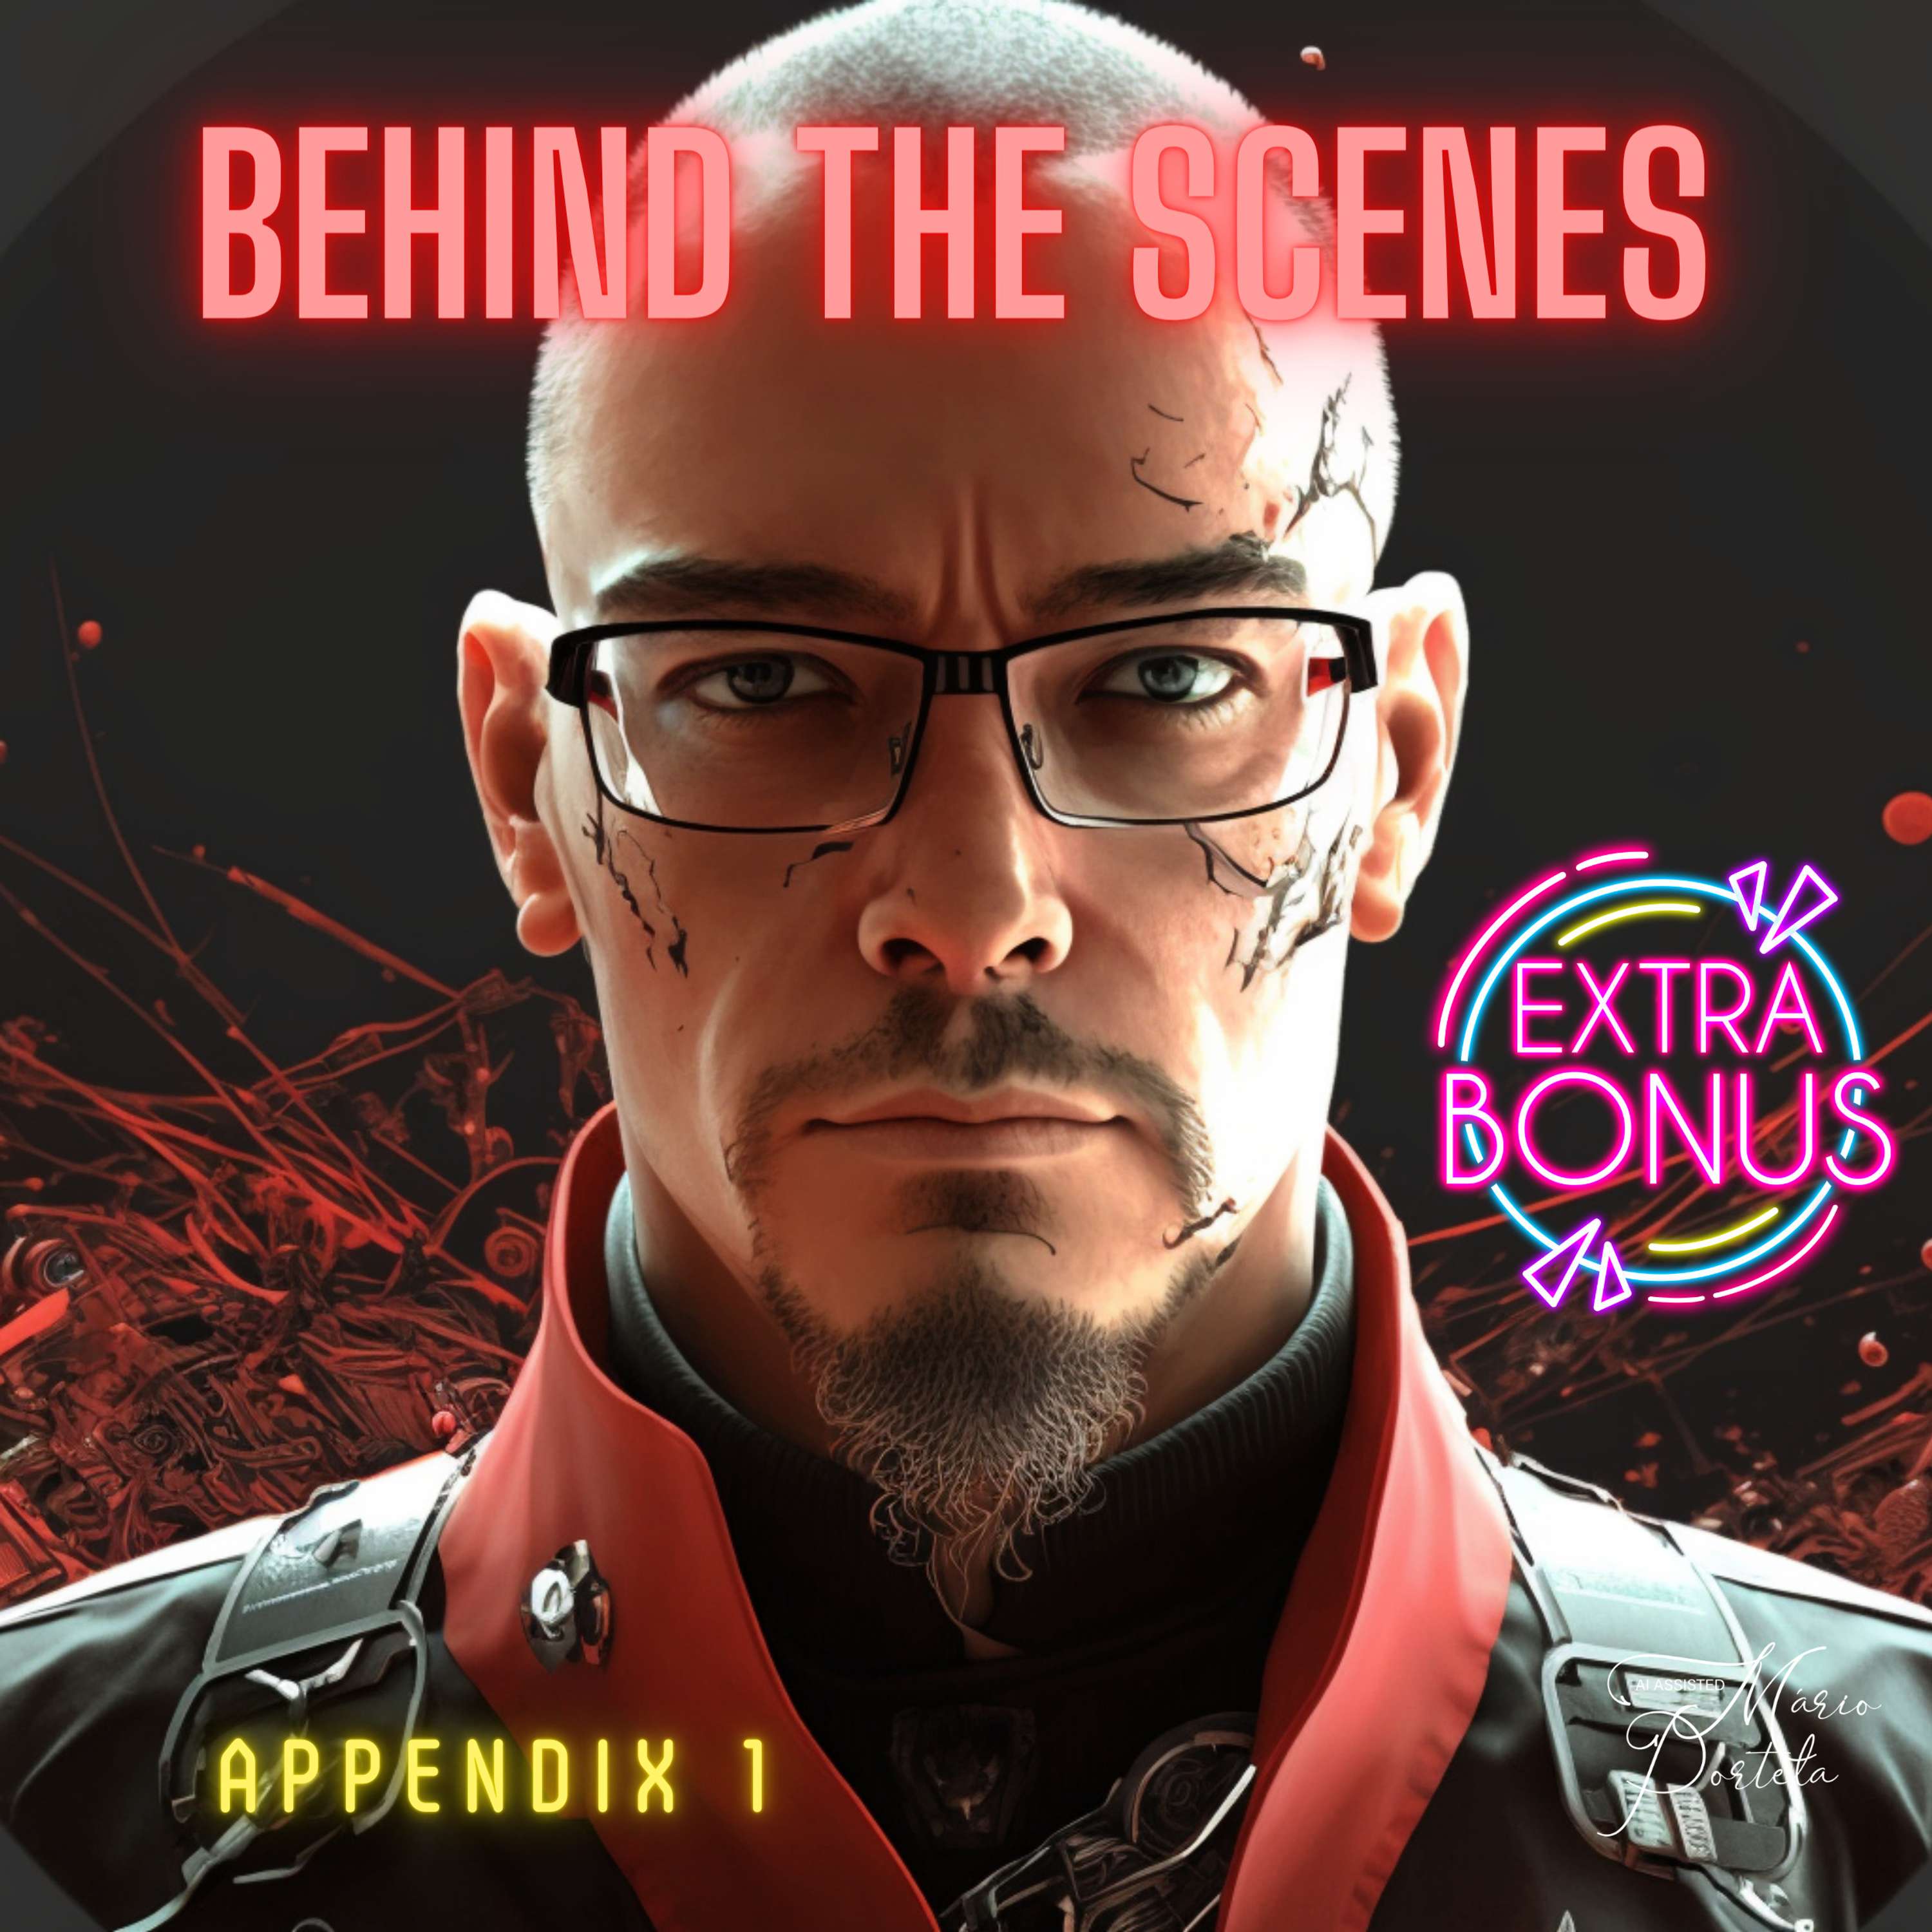 Appendix 1: Behind the Scenes